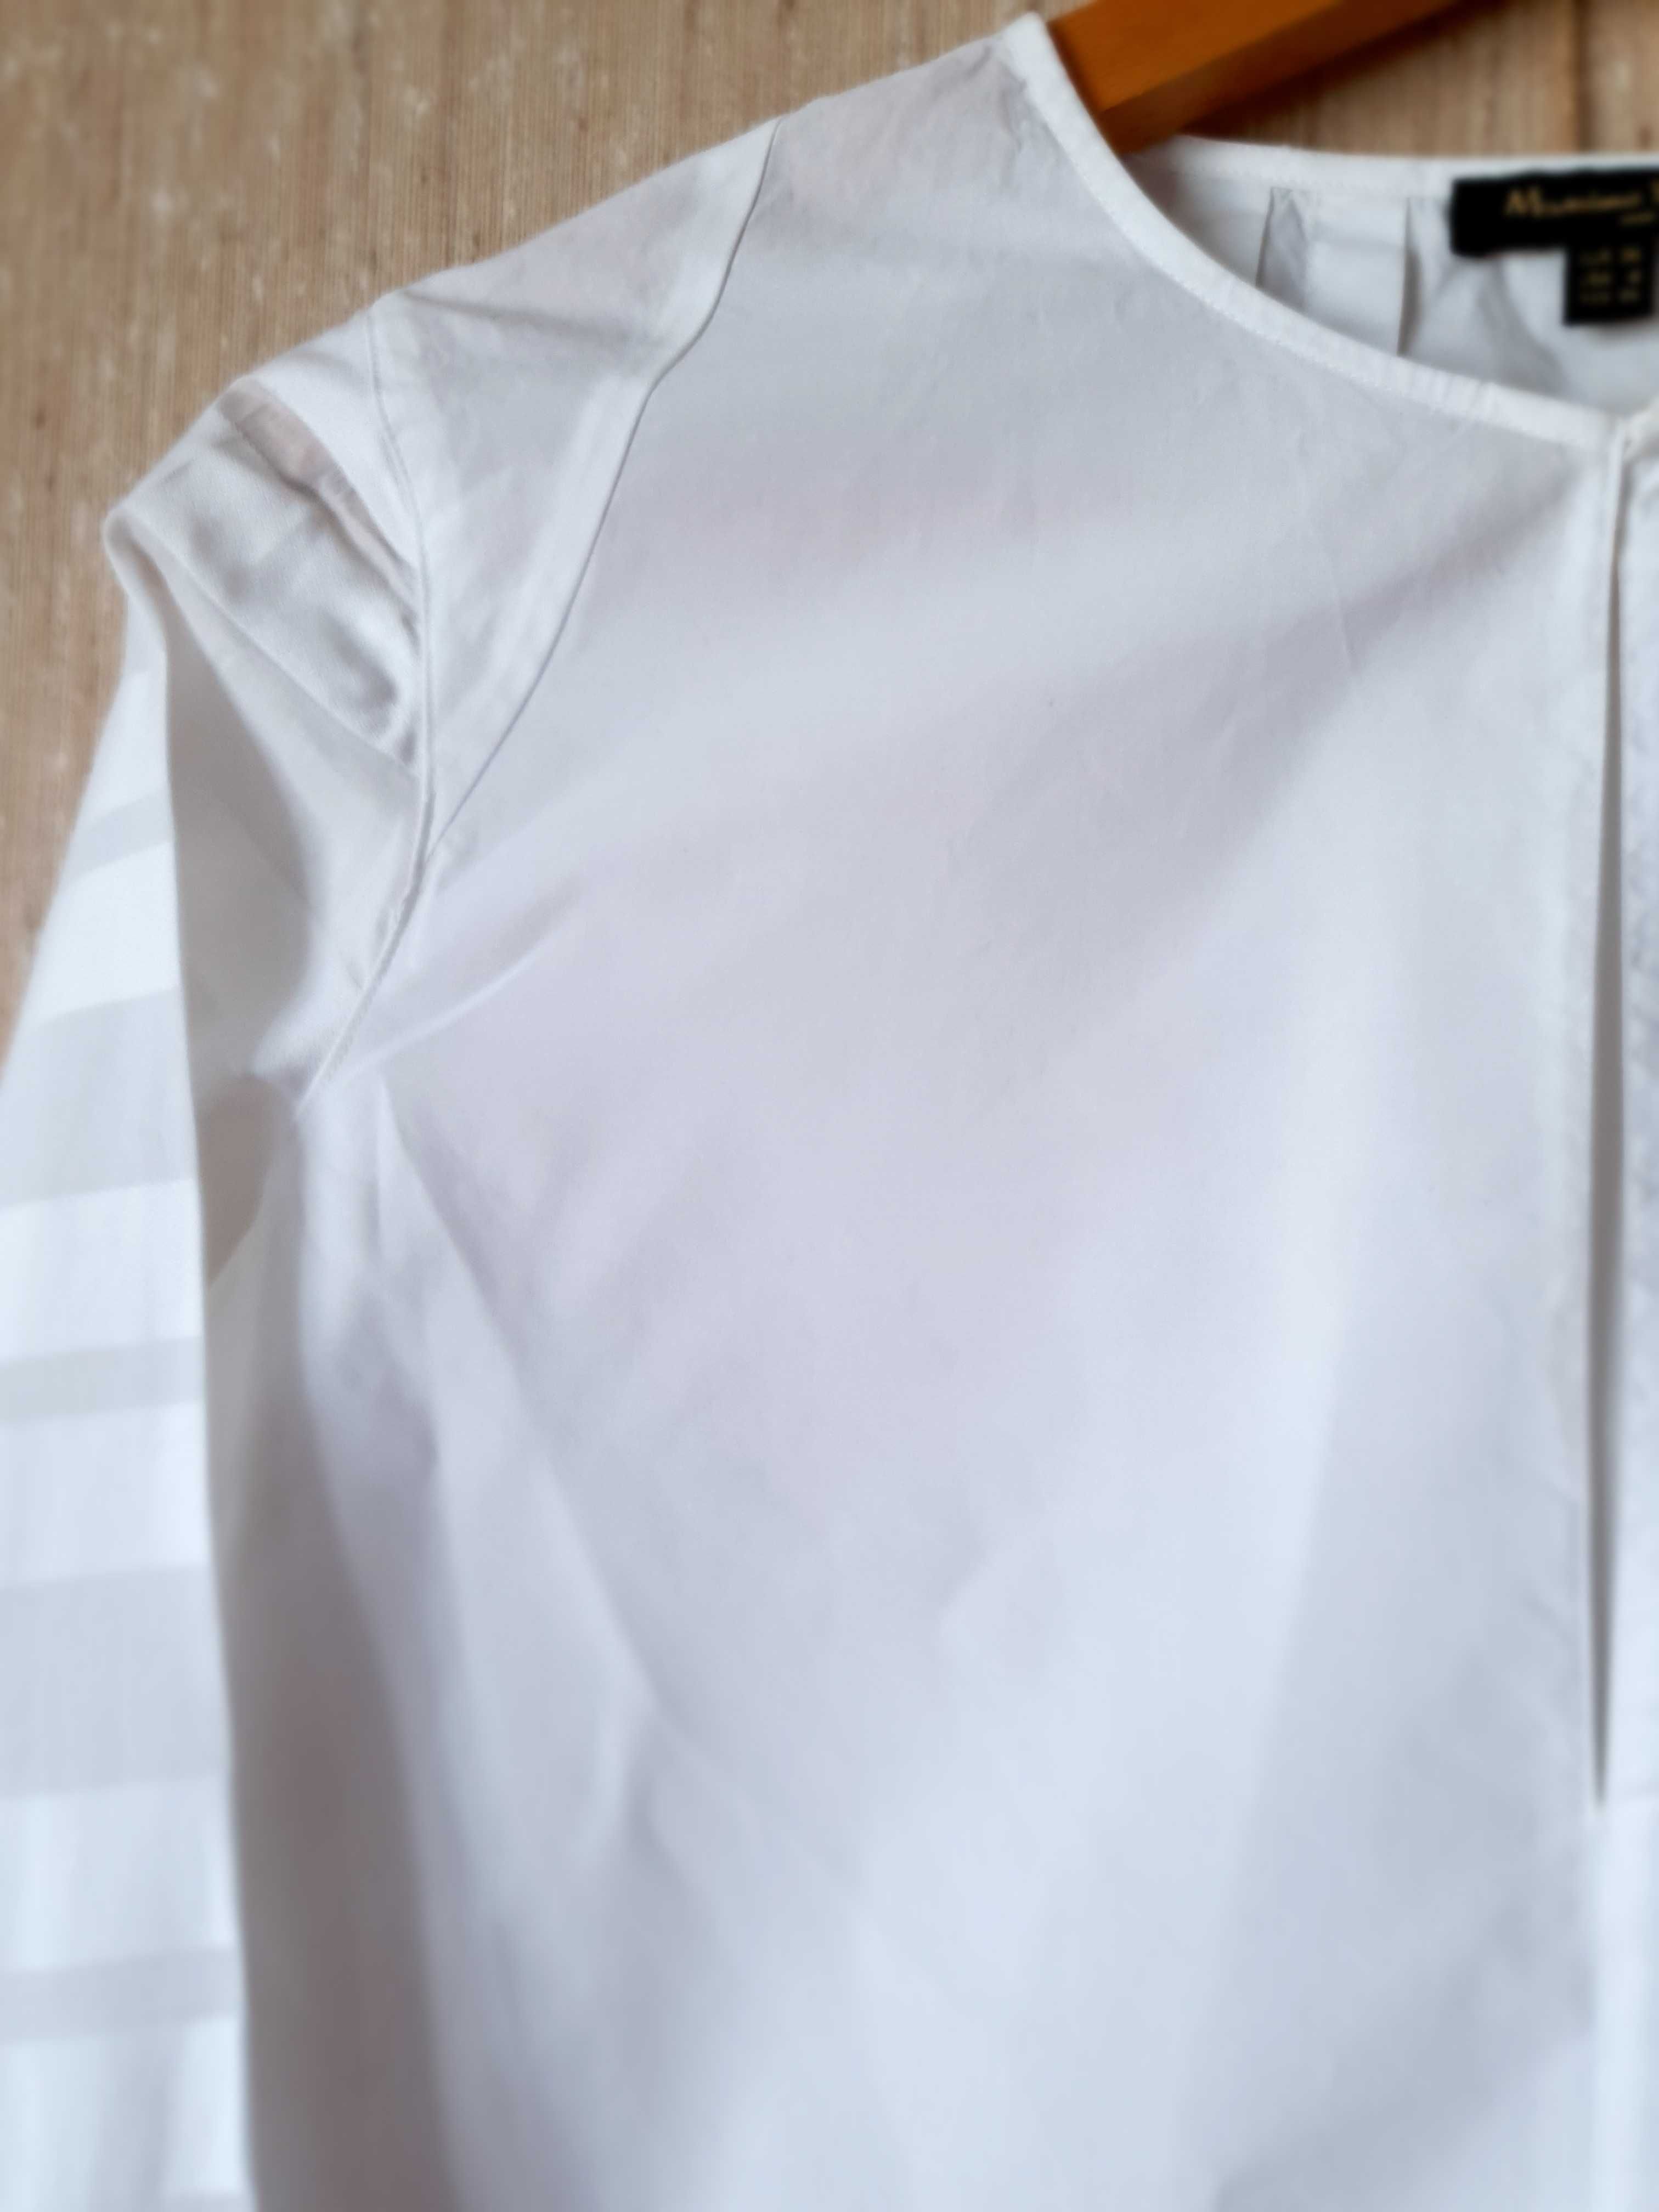 Нова дамска риза Massimo Dutti, размер 34-36/ XS-S, 100% памук